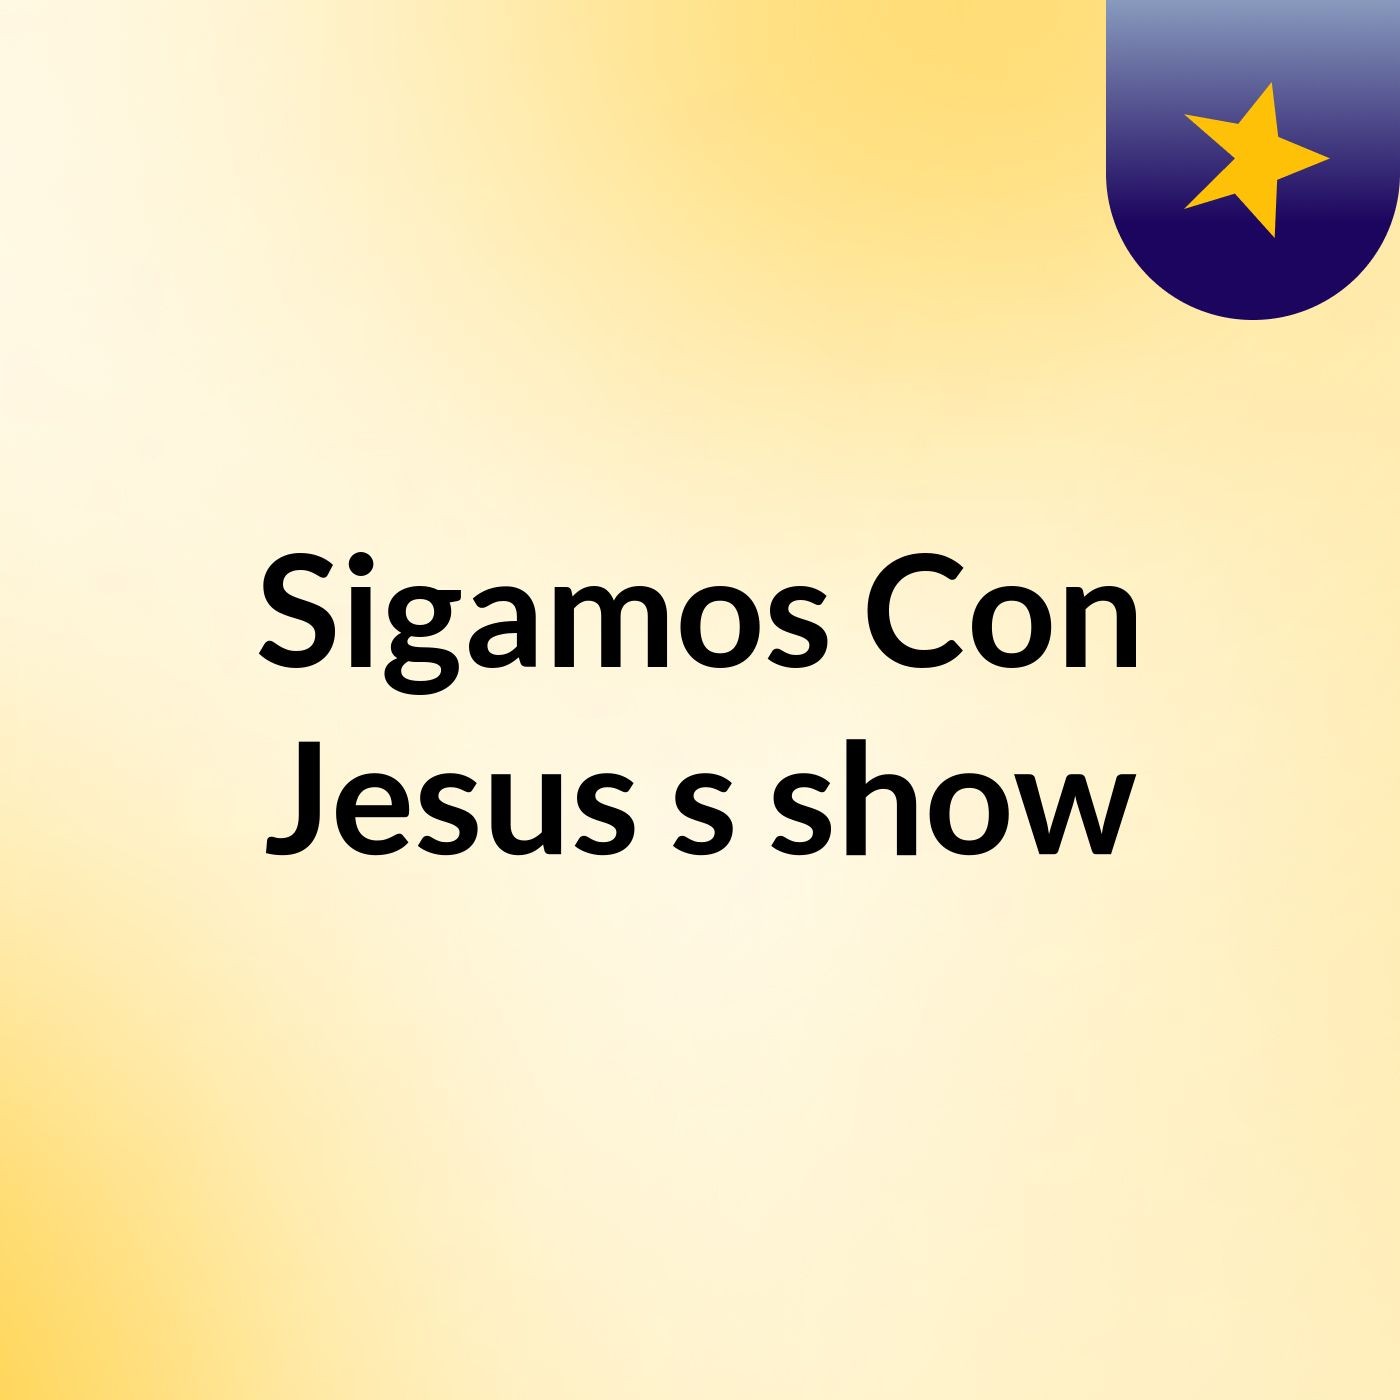 Sigamos Con Jesus's show